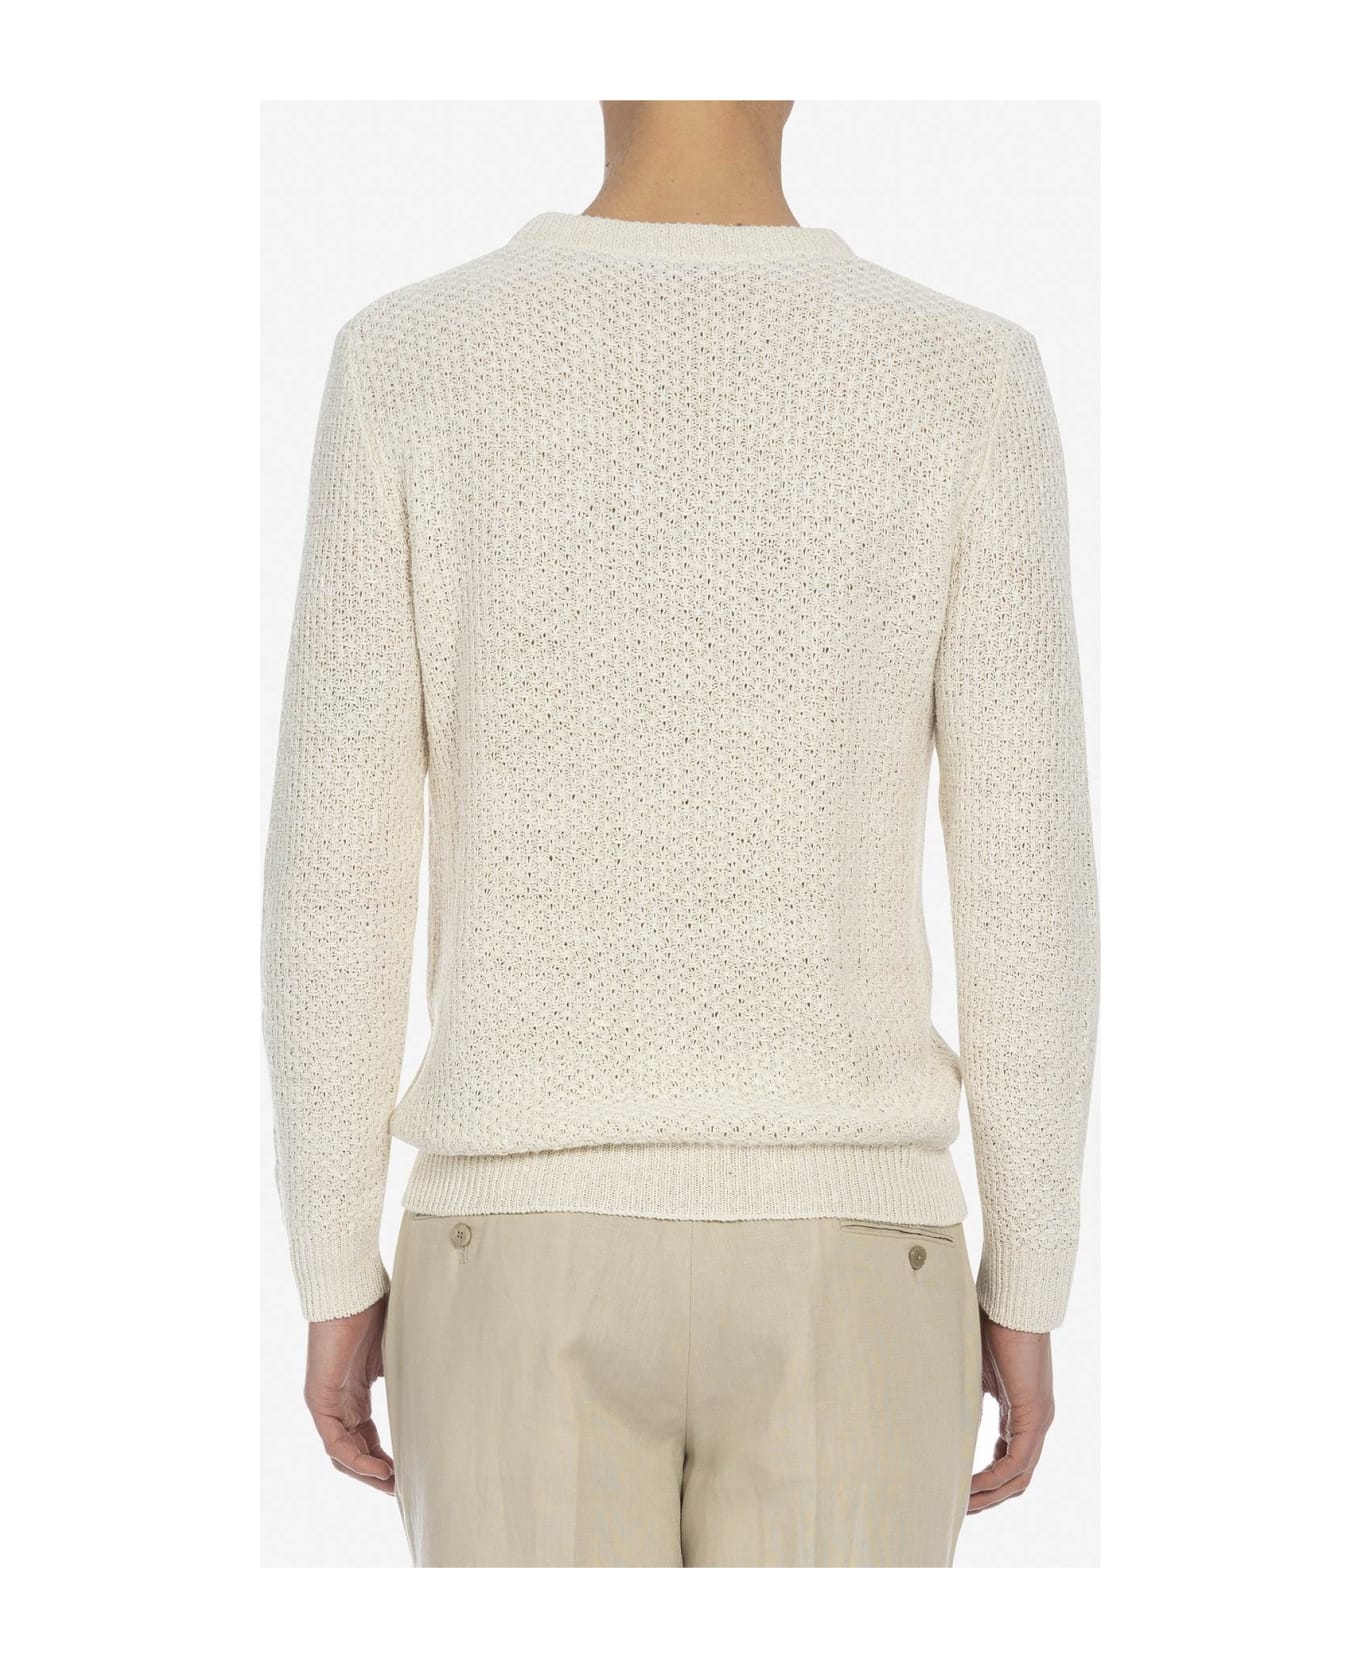 Larusmiani 'meadow Lane' Sweater Sweater - Ivory ニットウェア